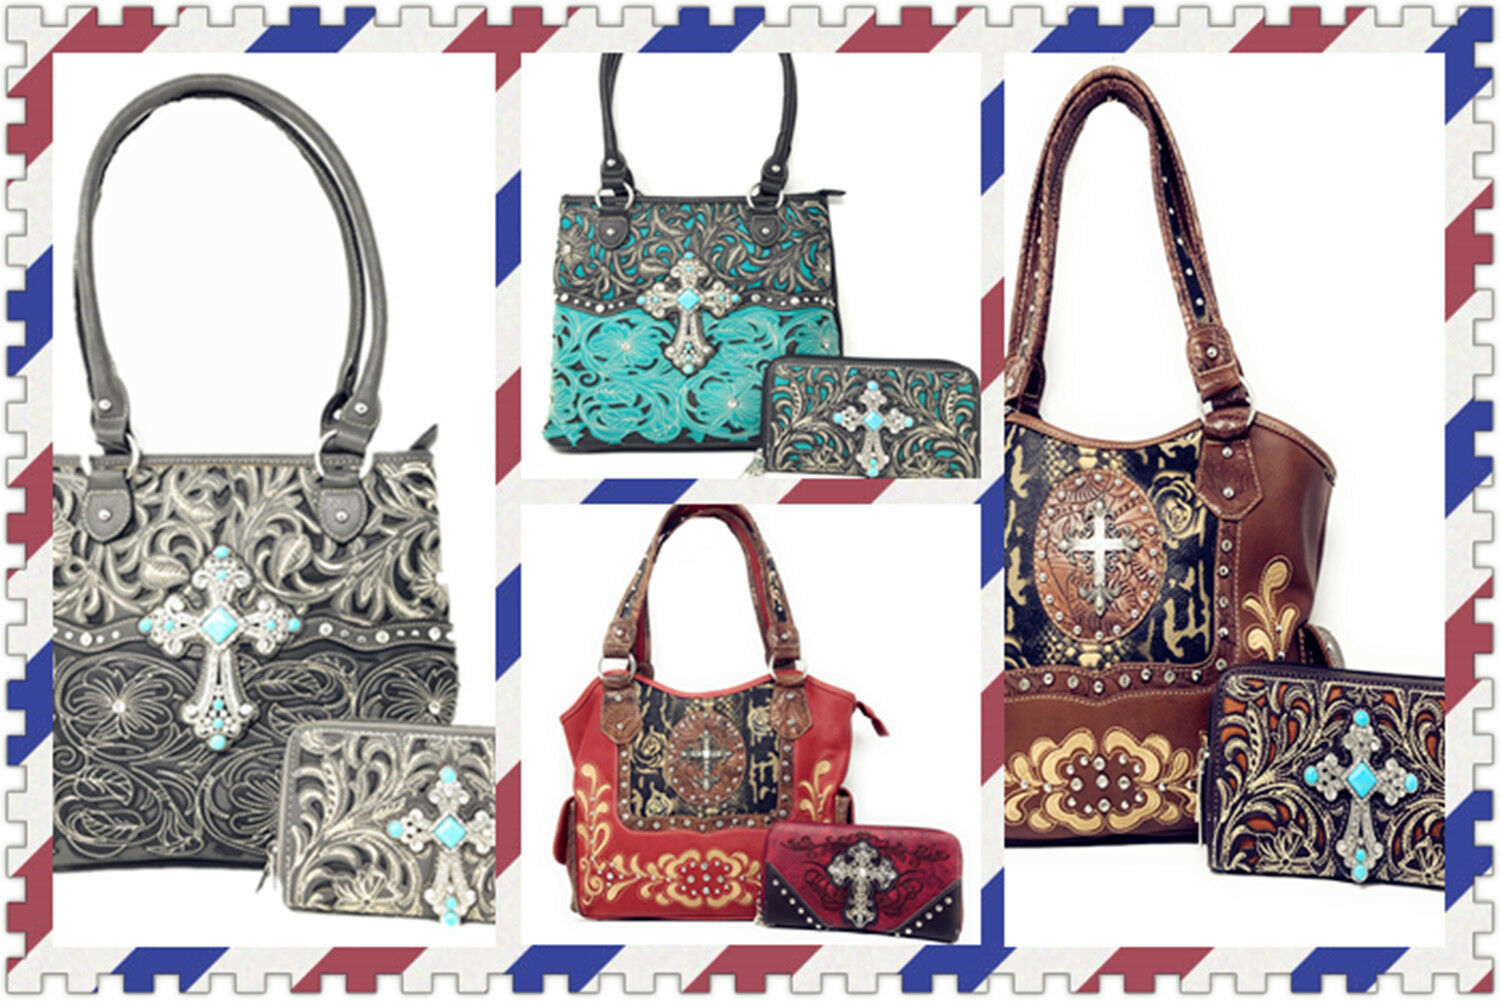 Premium Rhinestone Cross Floral Tooled Tote Handbag and Wallet in 3 colors.